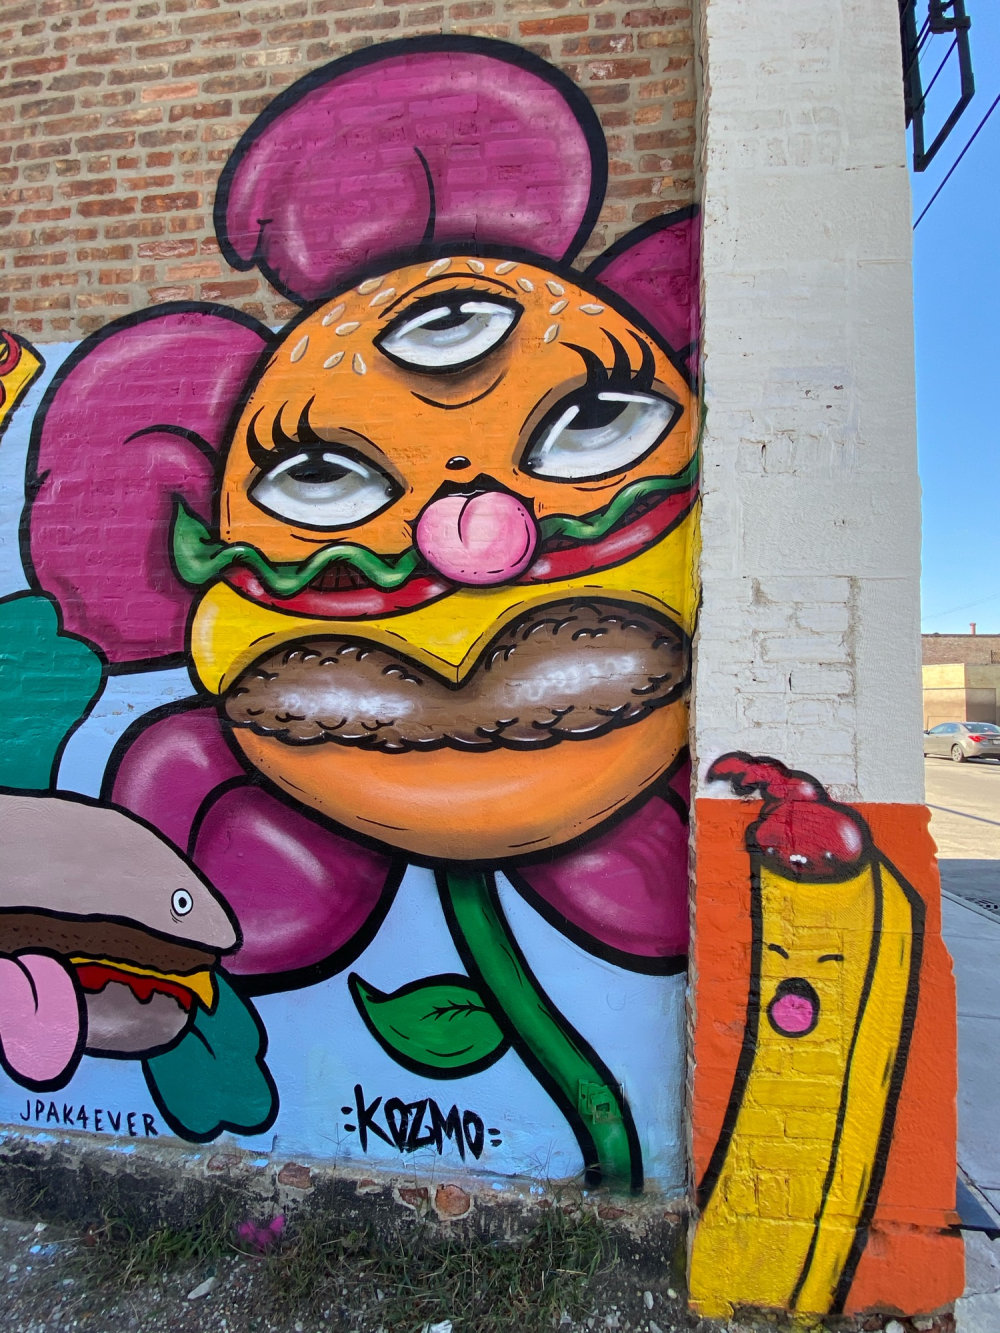 mural in Chicago by artist KOZMO.